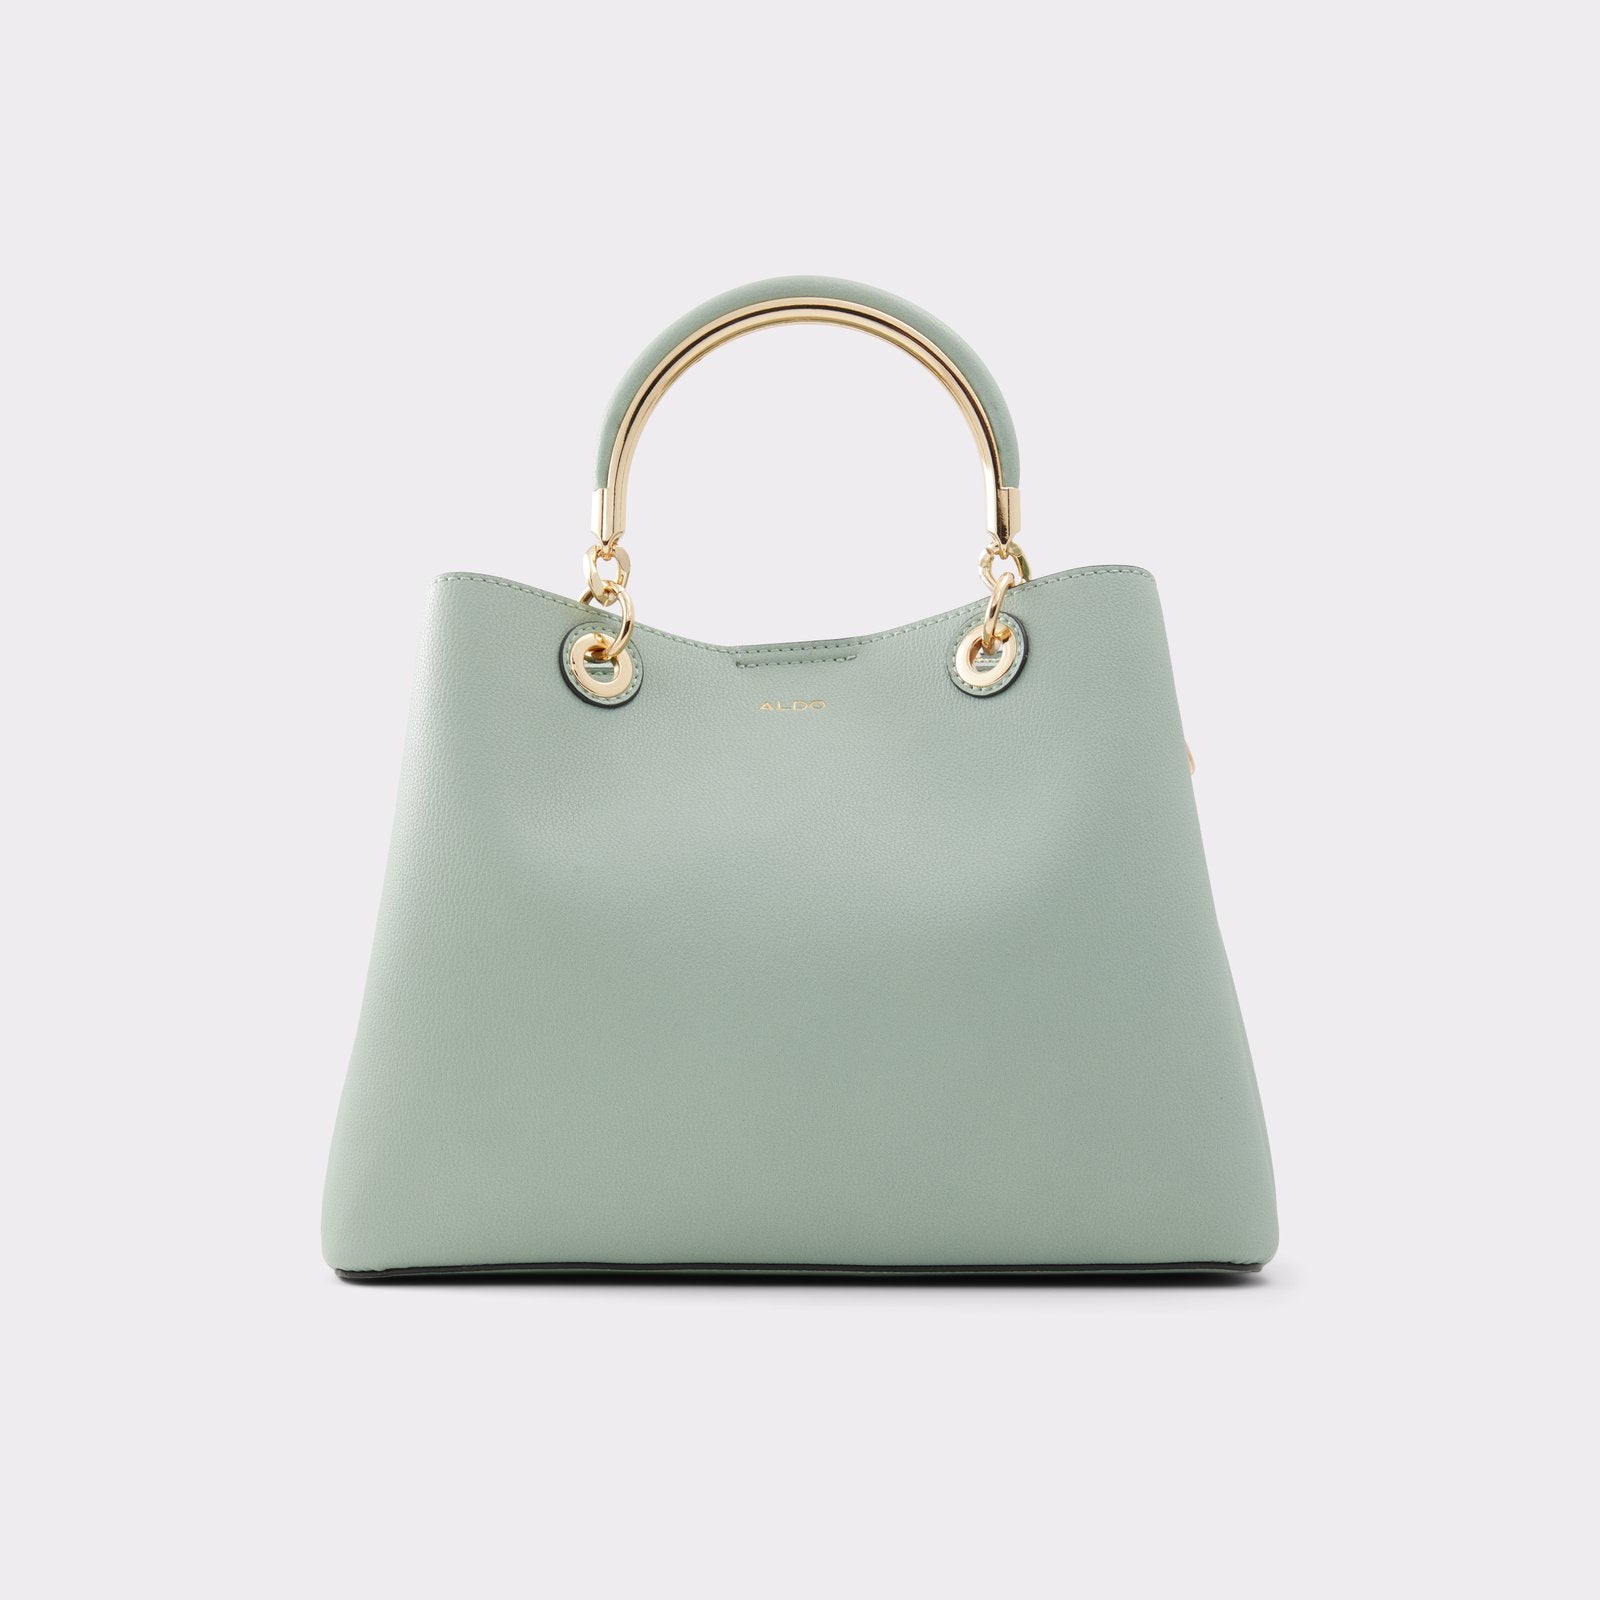 Surgoine Bag - Light Green - ALDO KSA